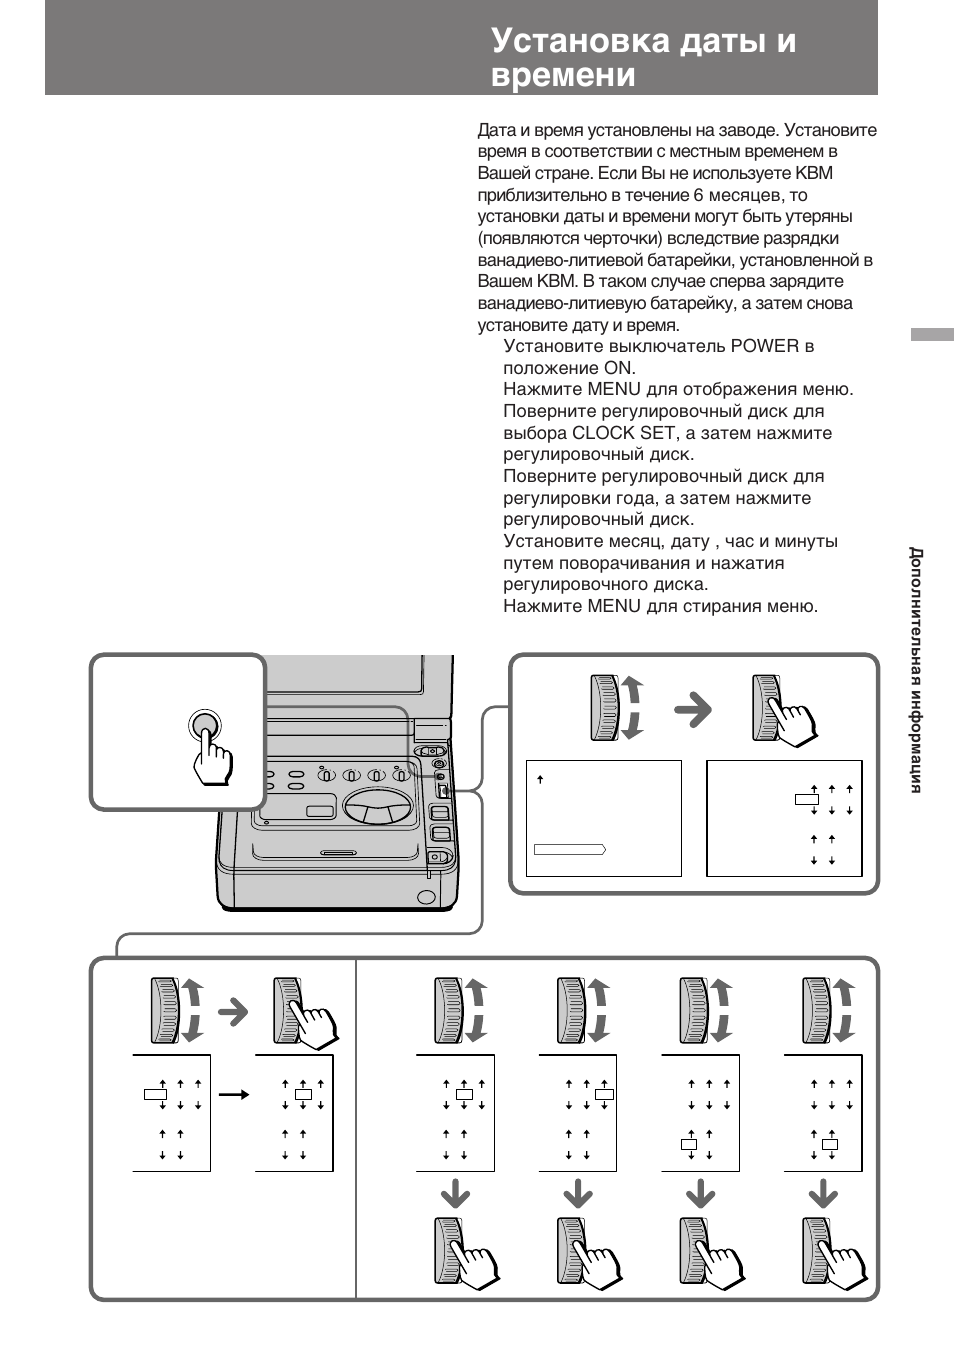 Resetting the date and time, Установка даты и времени | Инструкция по эксплуатации Sony Video Walkman GV-D900E | Страница 61 / 88